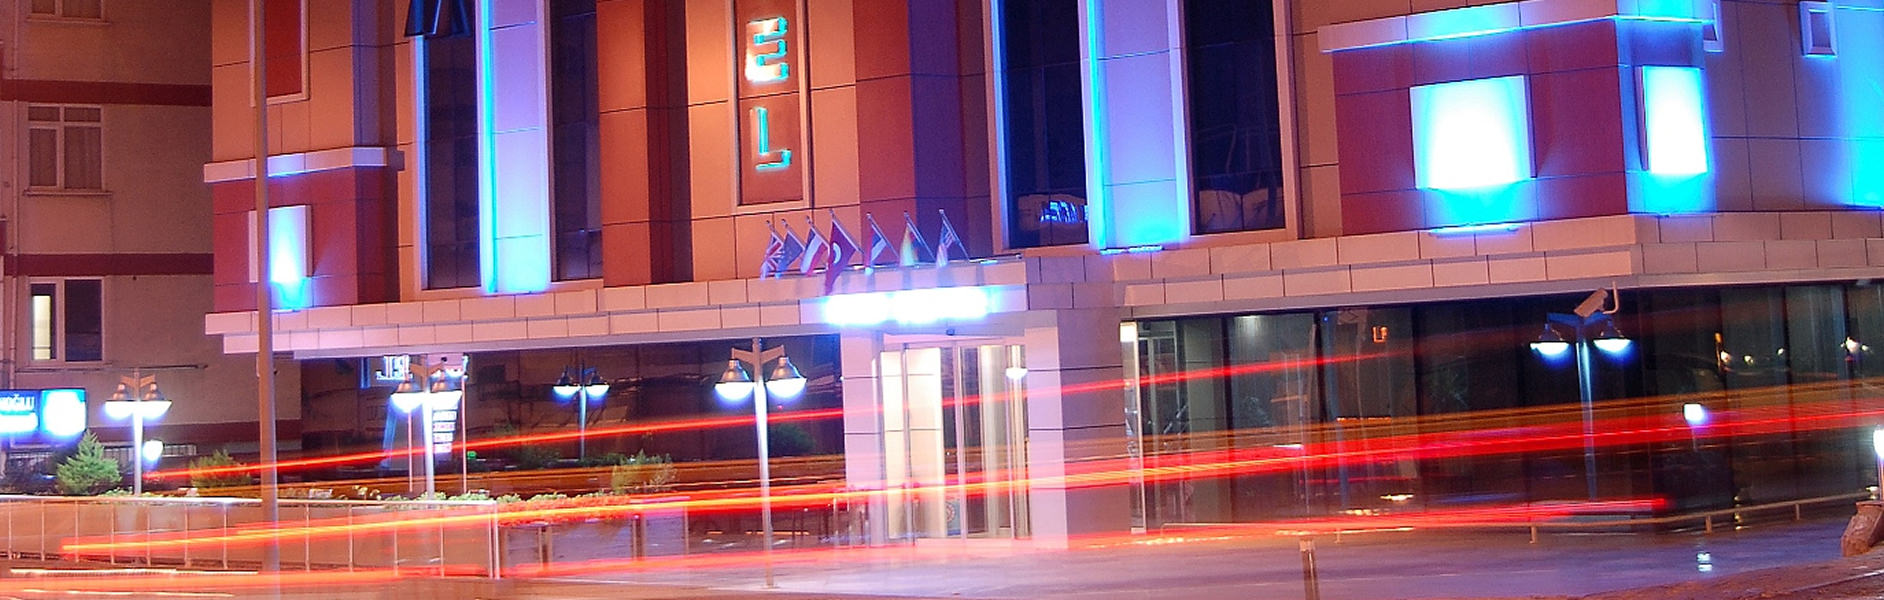 RHISS HOTEL BOSTANCI- Anadolu Yakası Business Hotel - Konfor ve Kalite birarada..